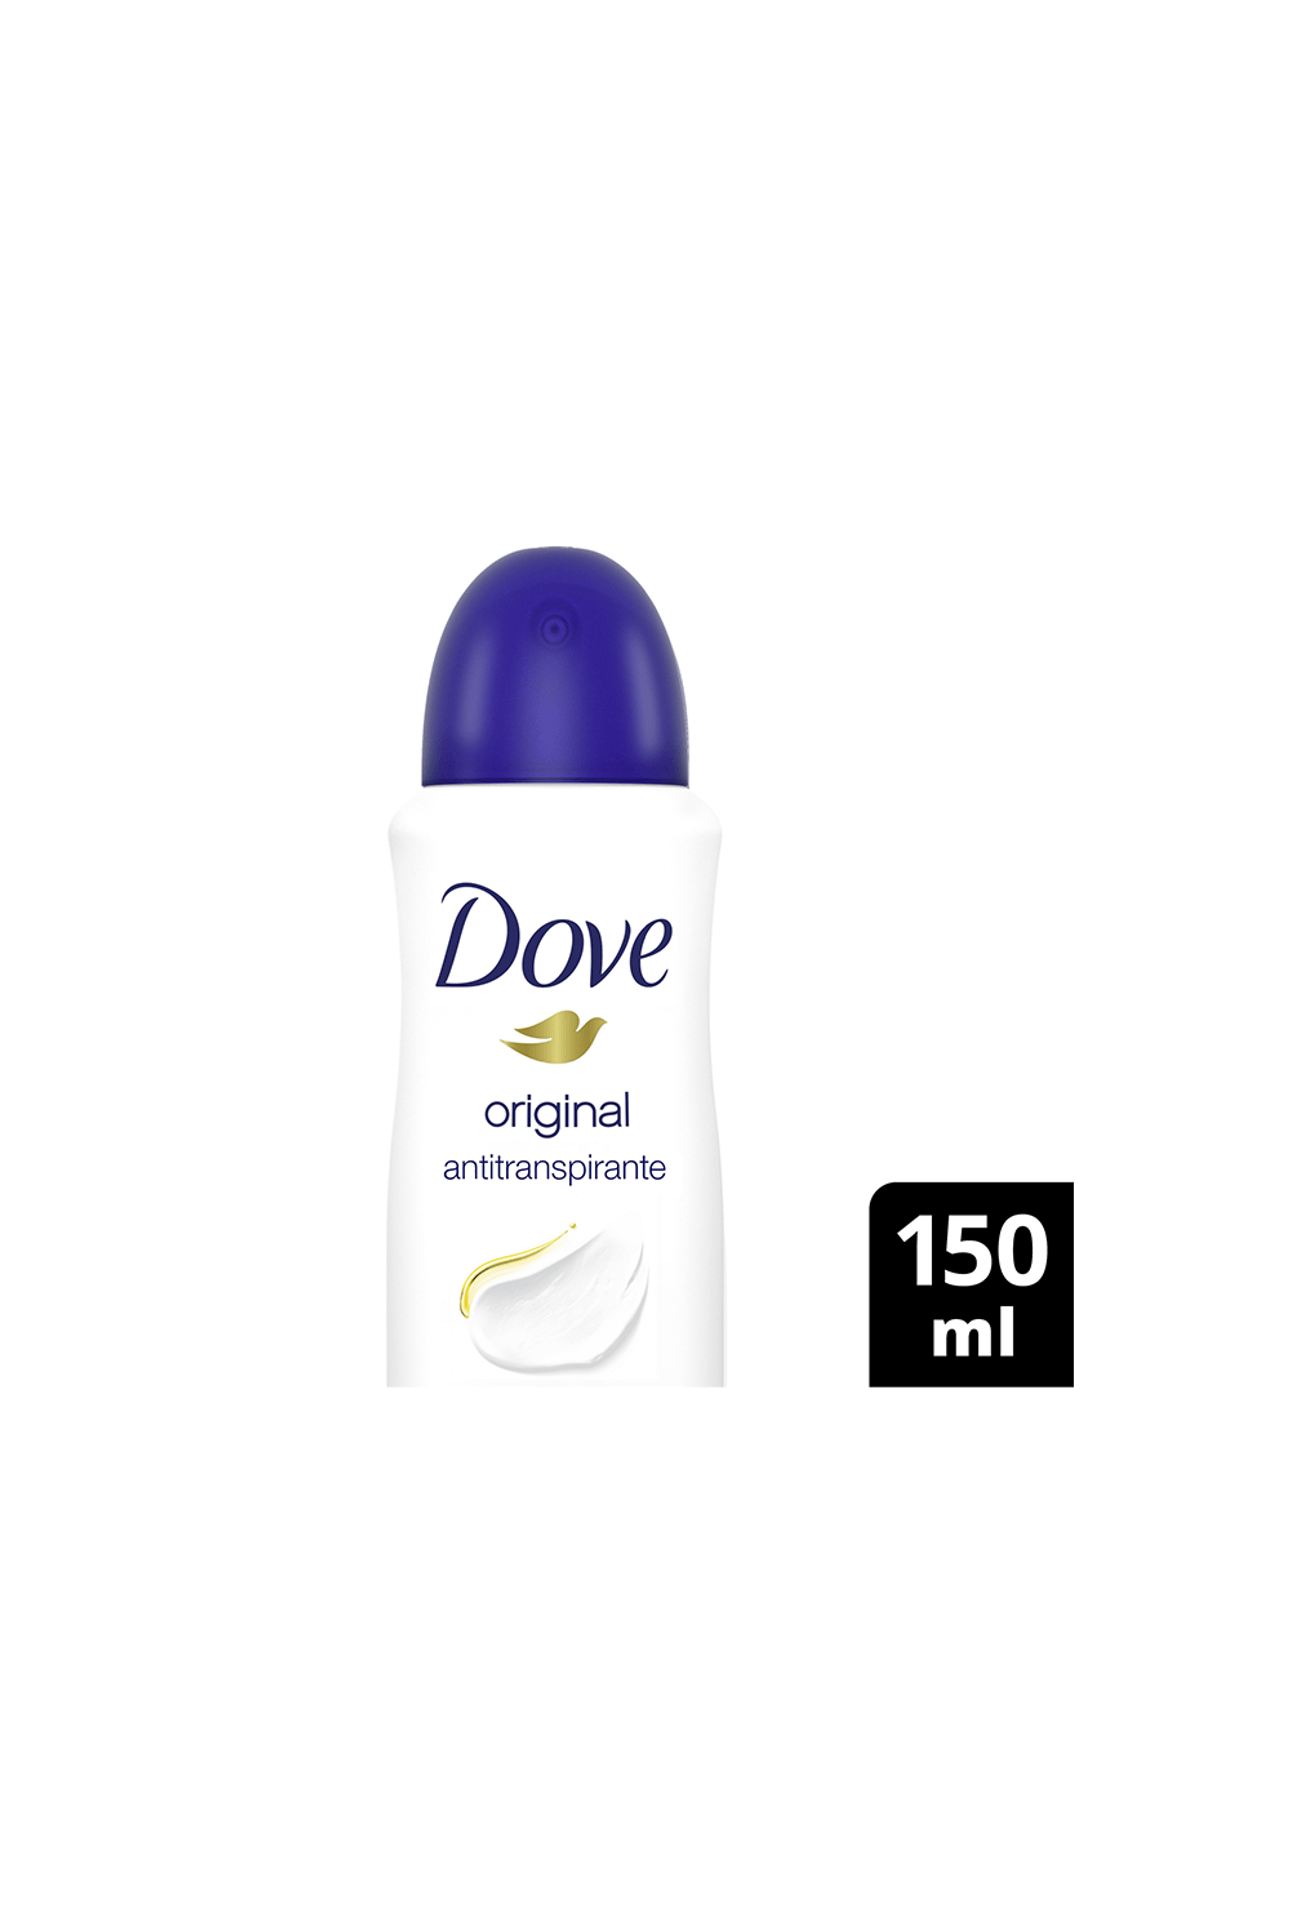 Dove-Antitranspirante-Dove-Original-x-150ml-7791293048468_img1